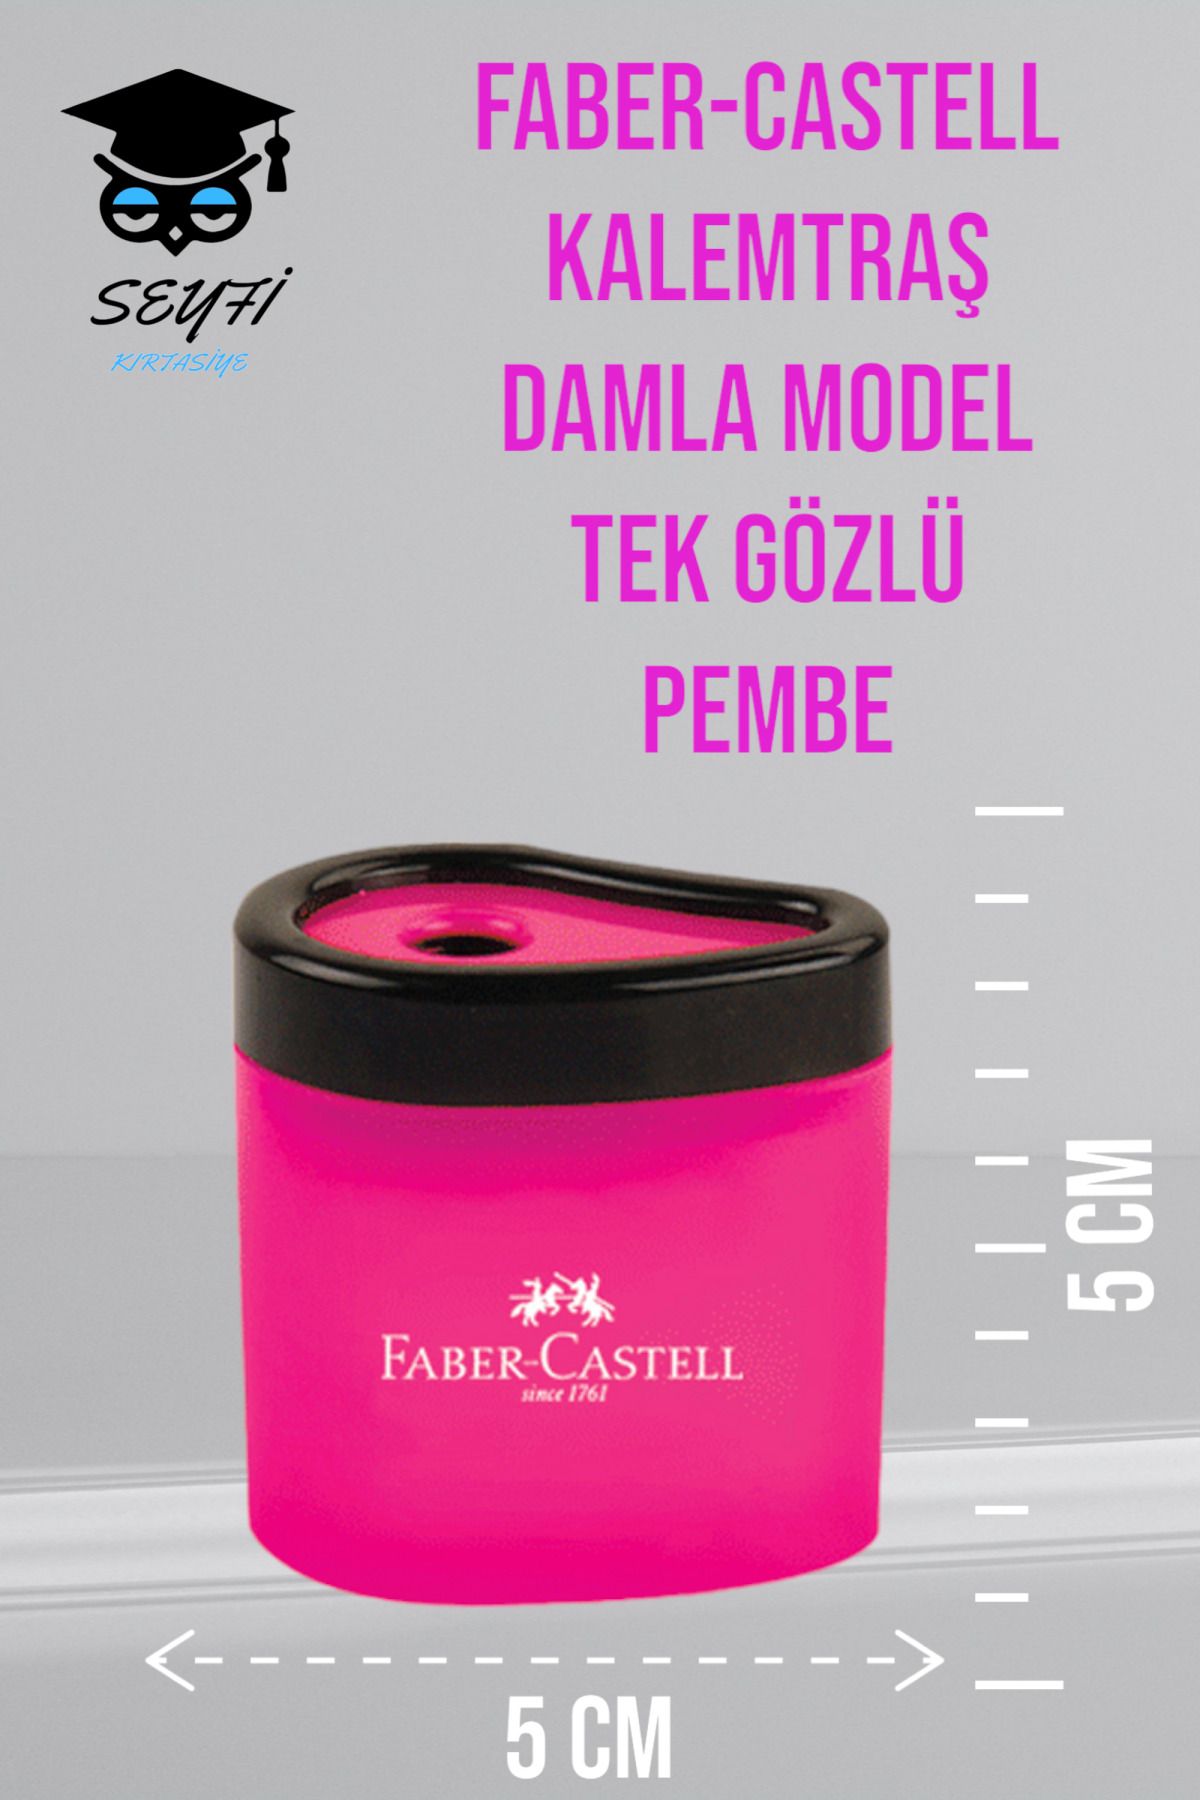 Faber Castell 1 ADET KALEMTRAŞ ÇEŞİTLİ MODELLER F-CASTELL %100  KALEMTIRAŞ